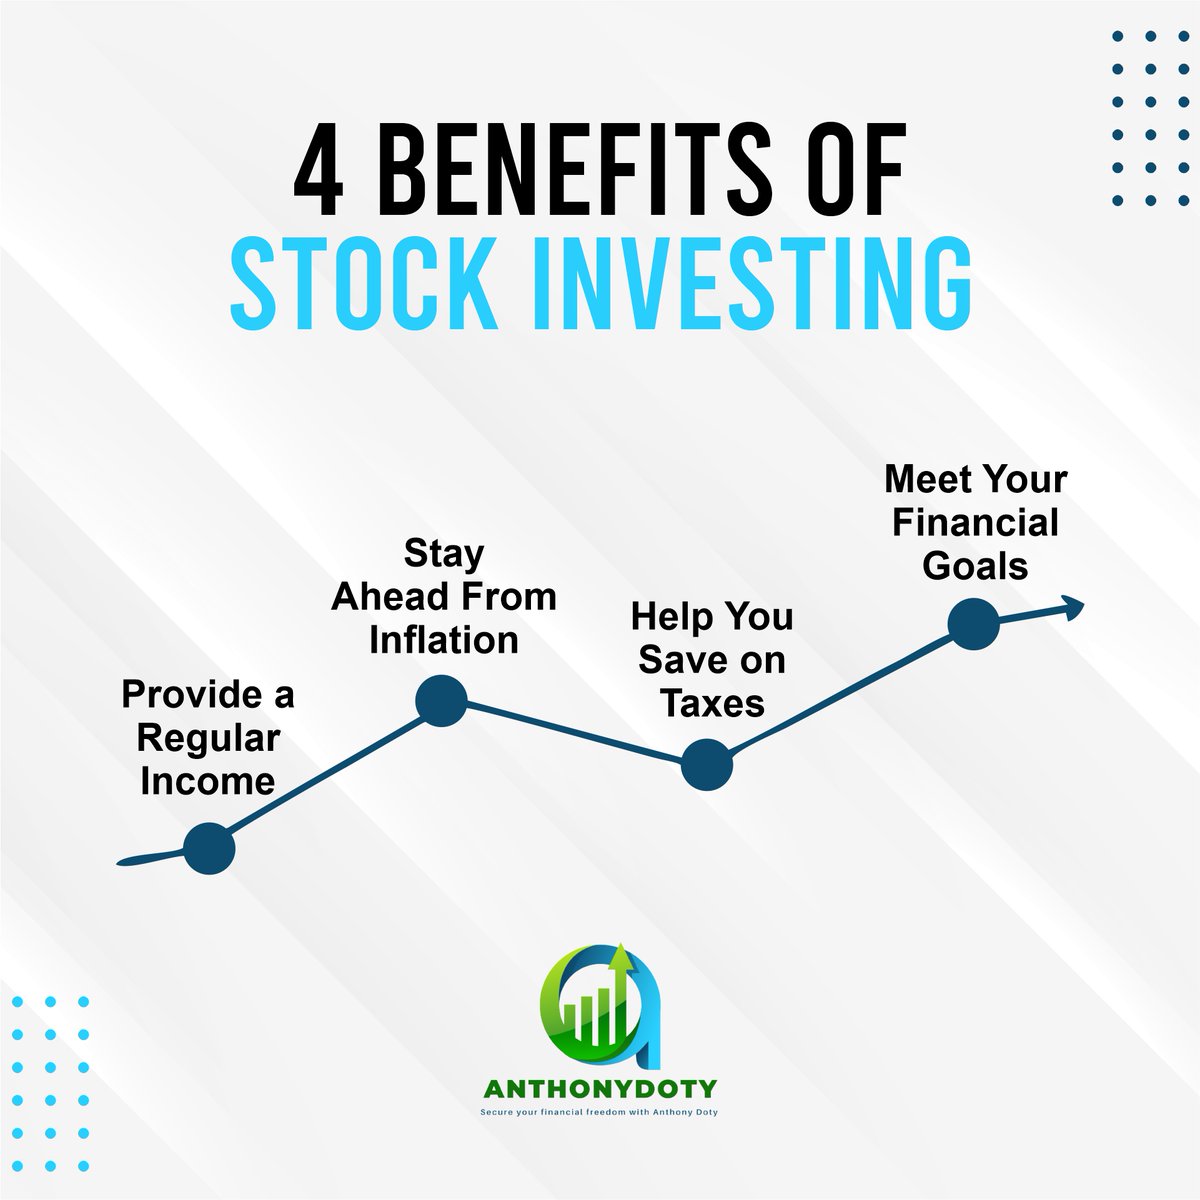 Four Benefits of Stock Investing.
--
🌐 anthonydoty.com
.
.
.
.
.
#financialindependence
#financialwisdom
#moneymanagement
#StockInvesting
#InvestmentBenefits
#FinancialGrowth
#WealthBuilding
#FinancialFreedom
#InvestingTips
#StockMarketGains
#SmartInvesting…